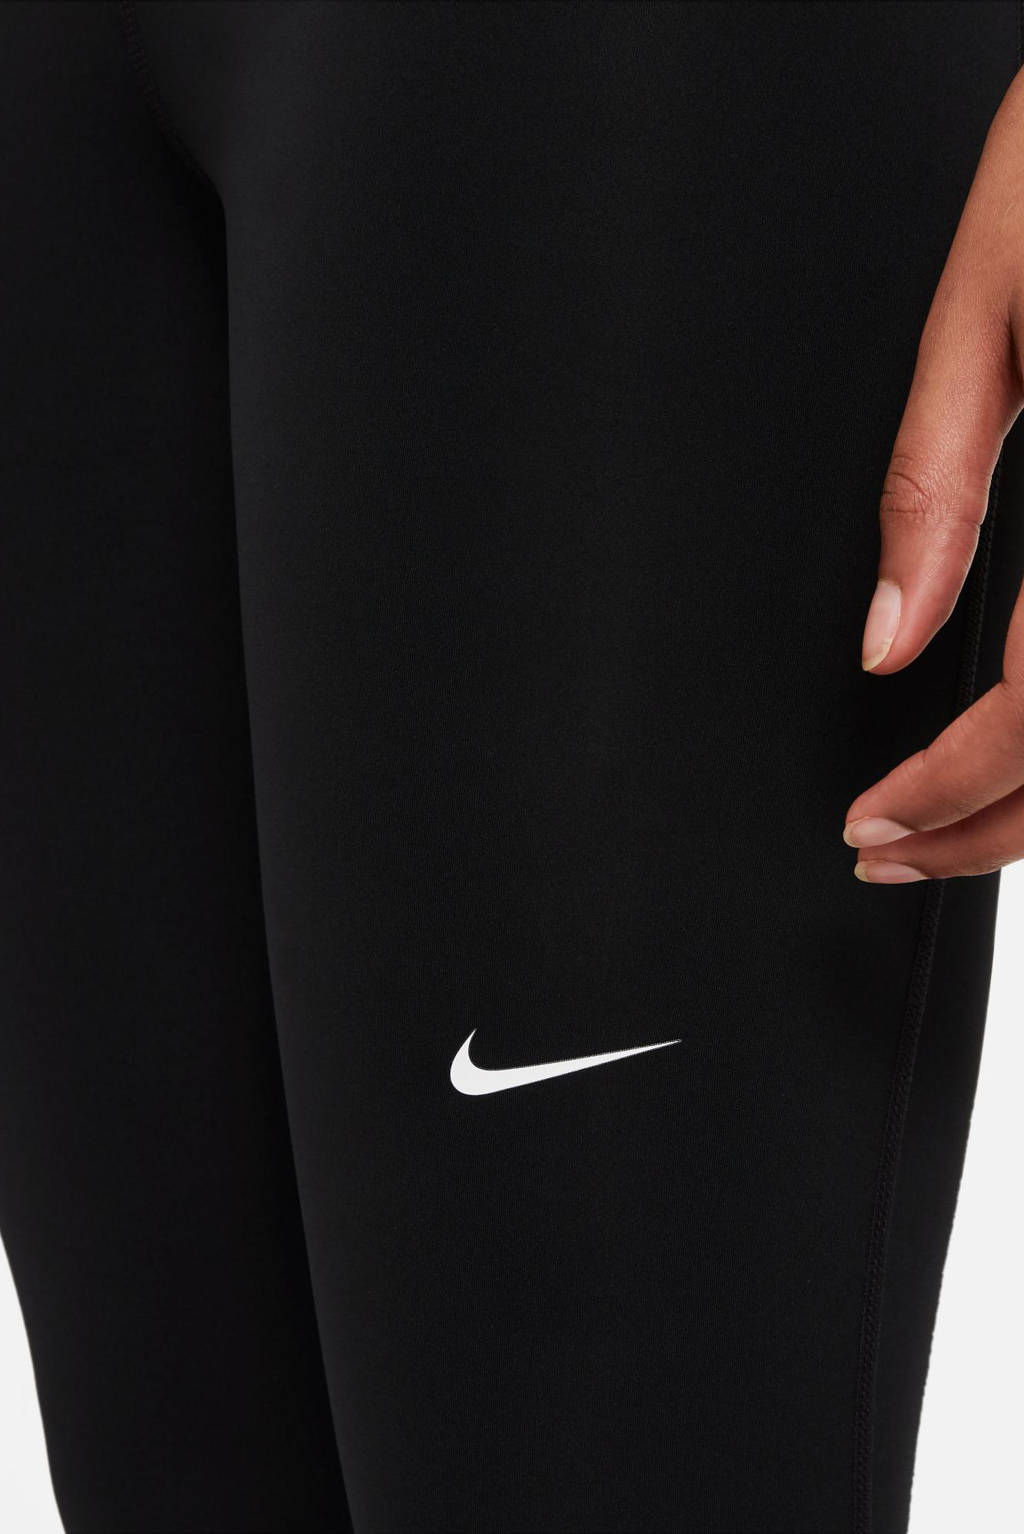 Af en toe moersleutel Pornografie Nike Pro sportlegging zwart/wit | wehkamp